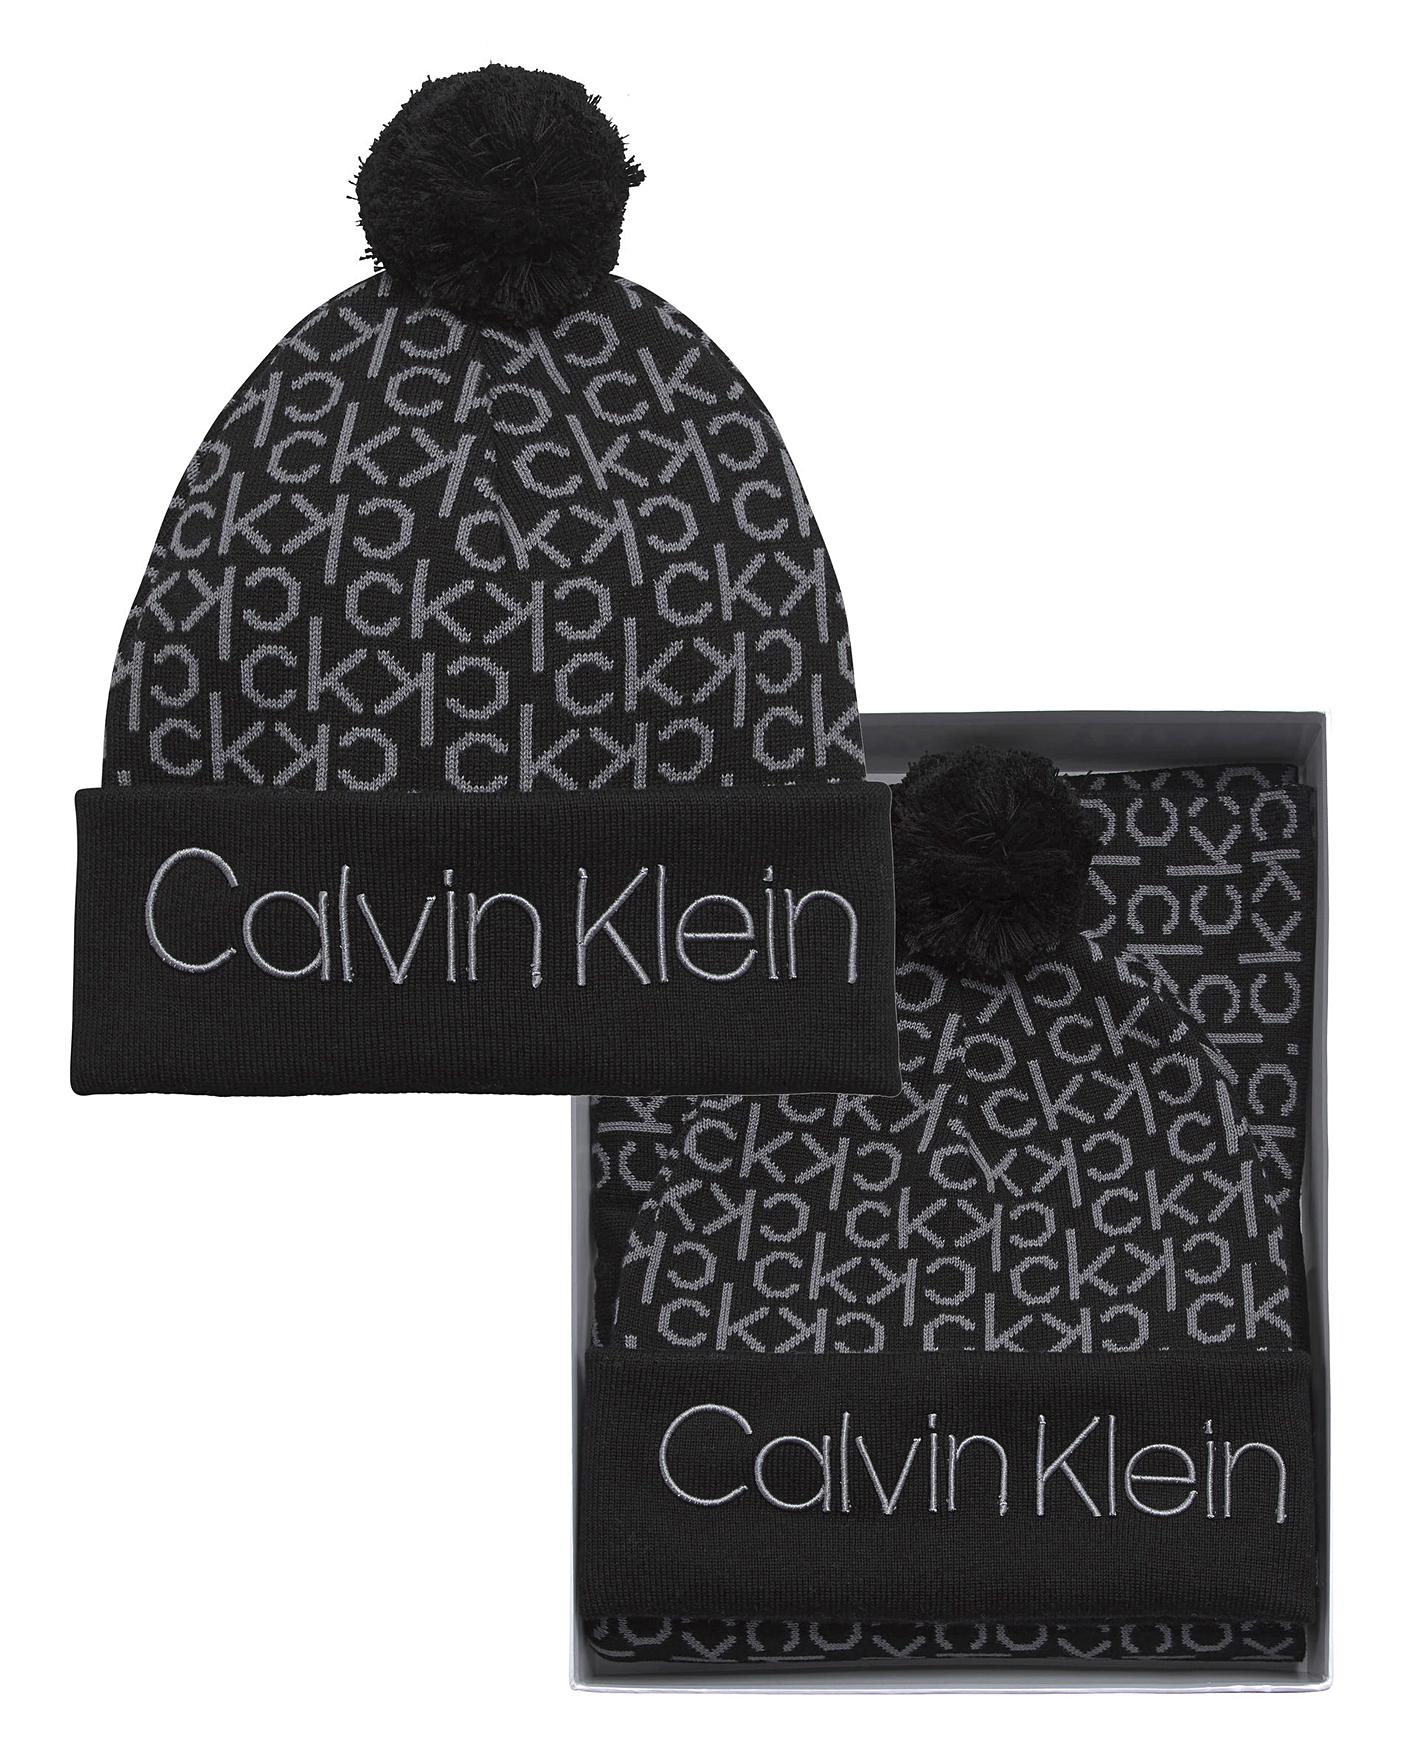 calvin klein hat and scarf set